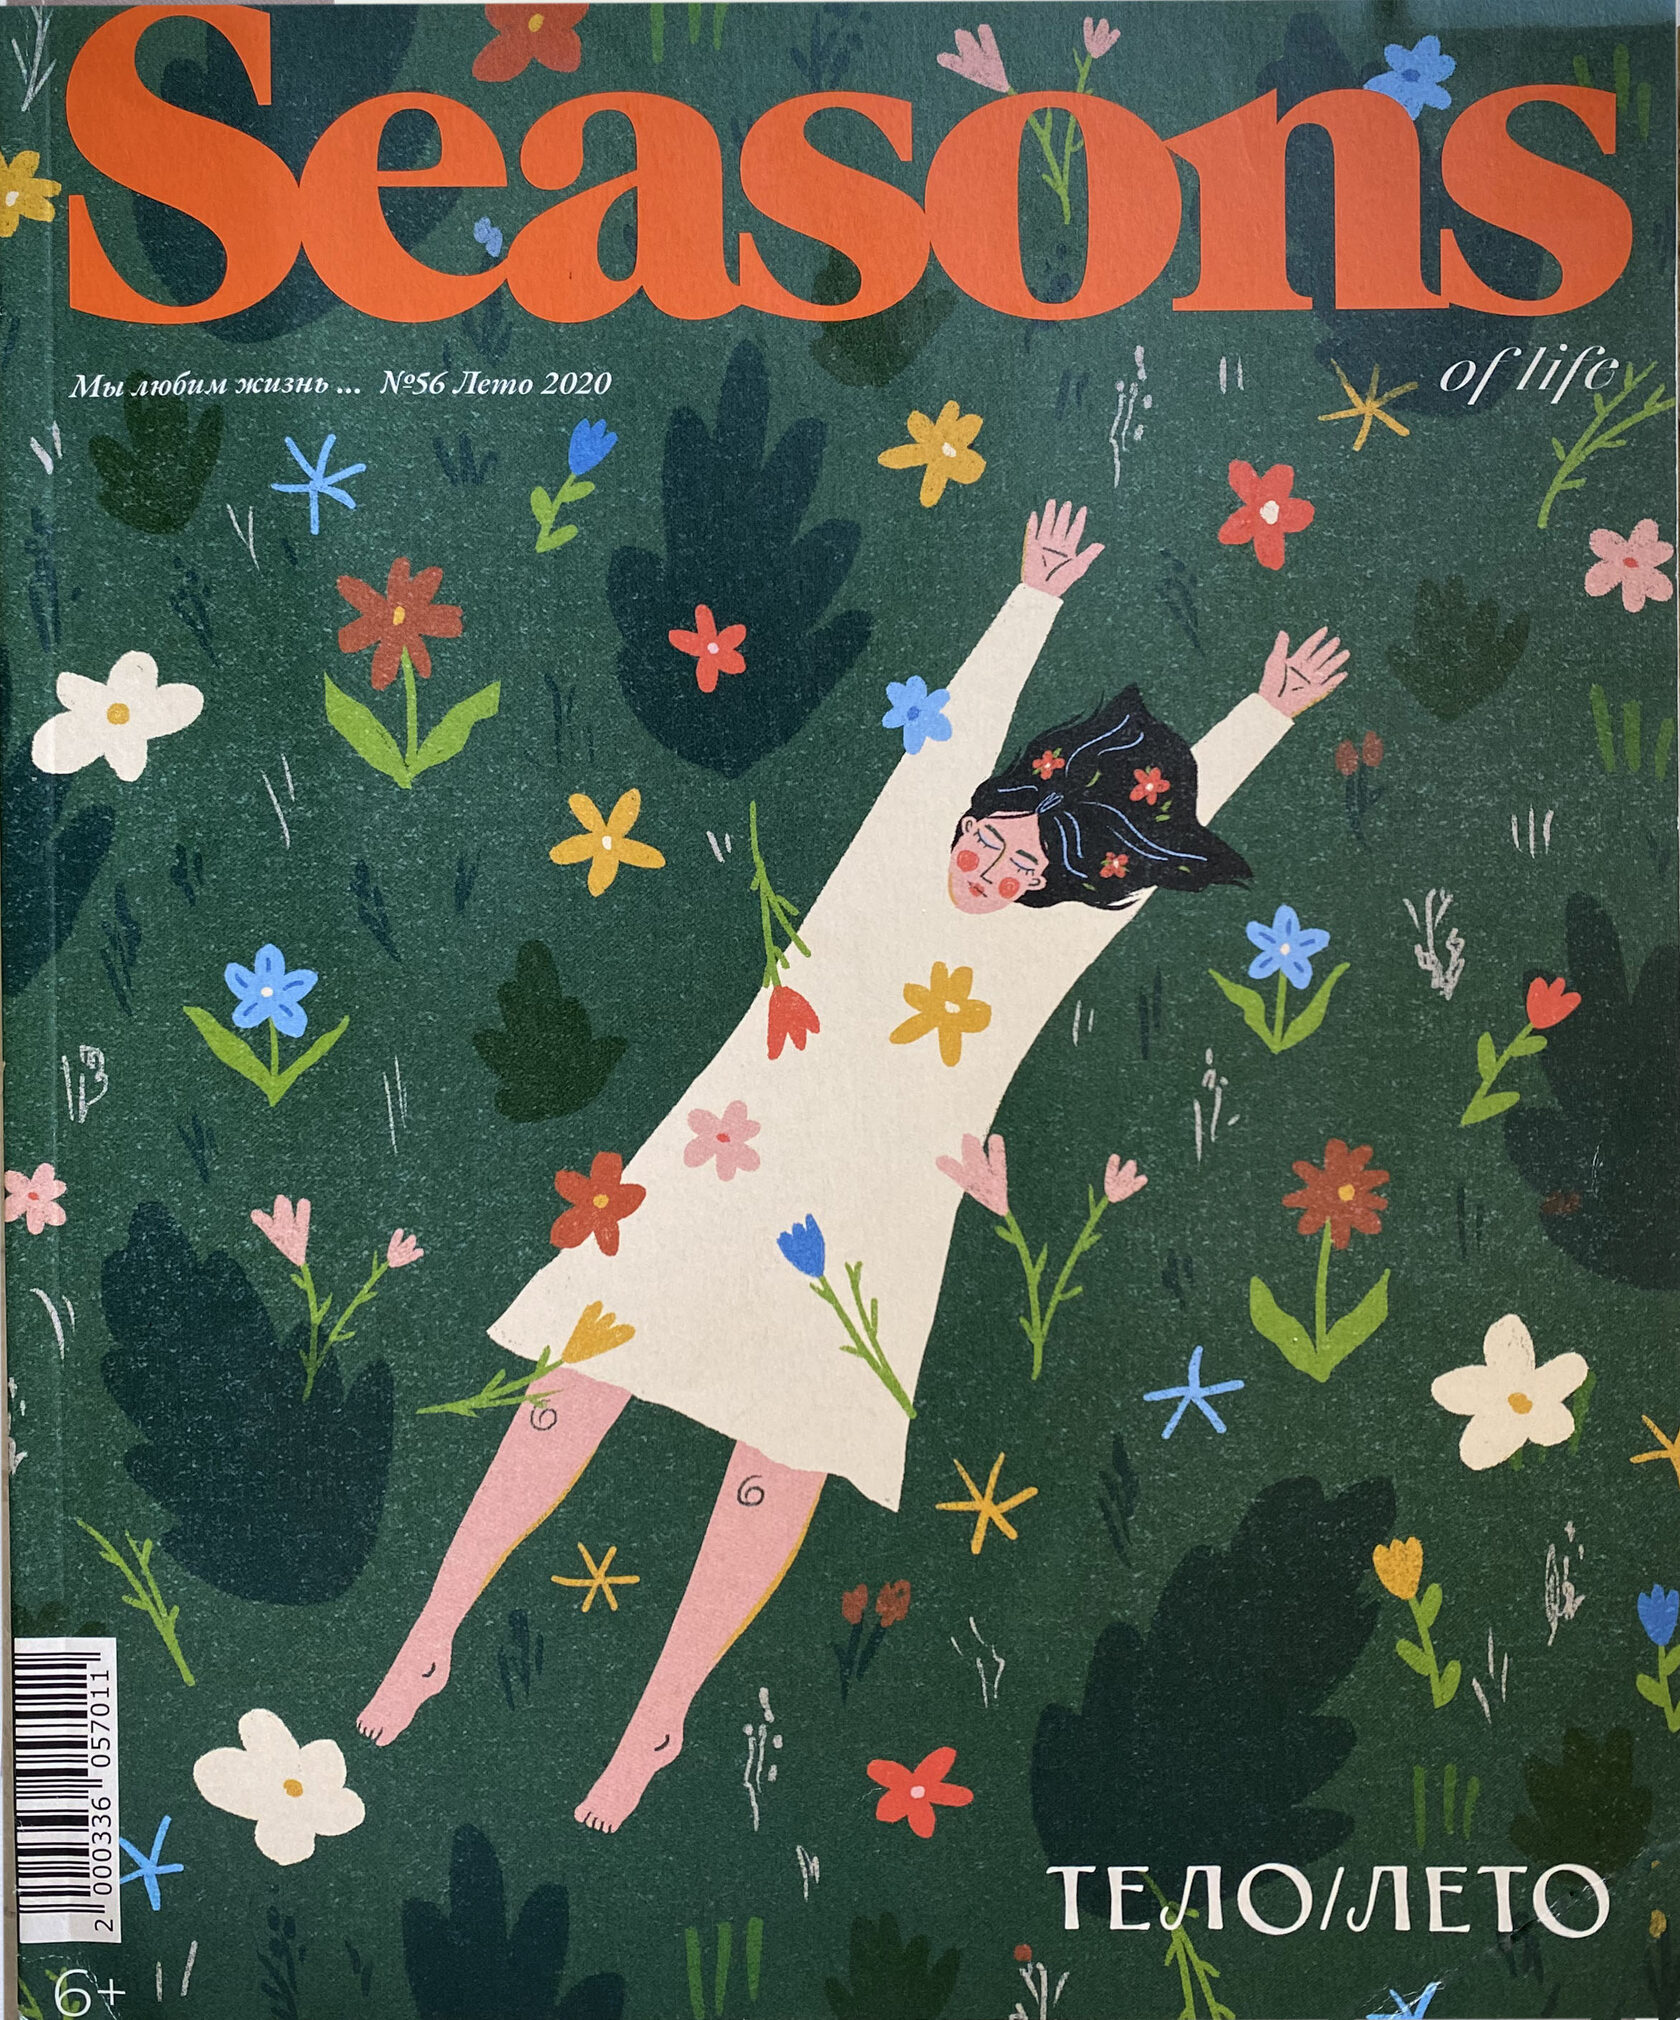 Сизонс журнал. Seasons журнал. Журнал Сизонс обложки. Seasons of Life журнал. Seasons шурнала.